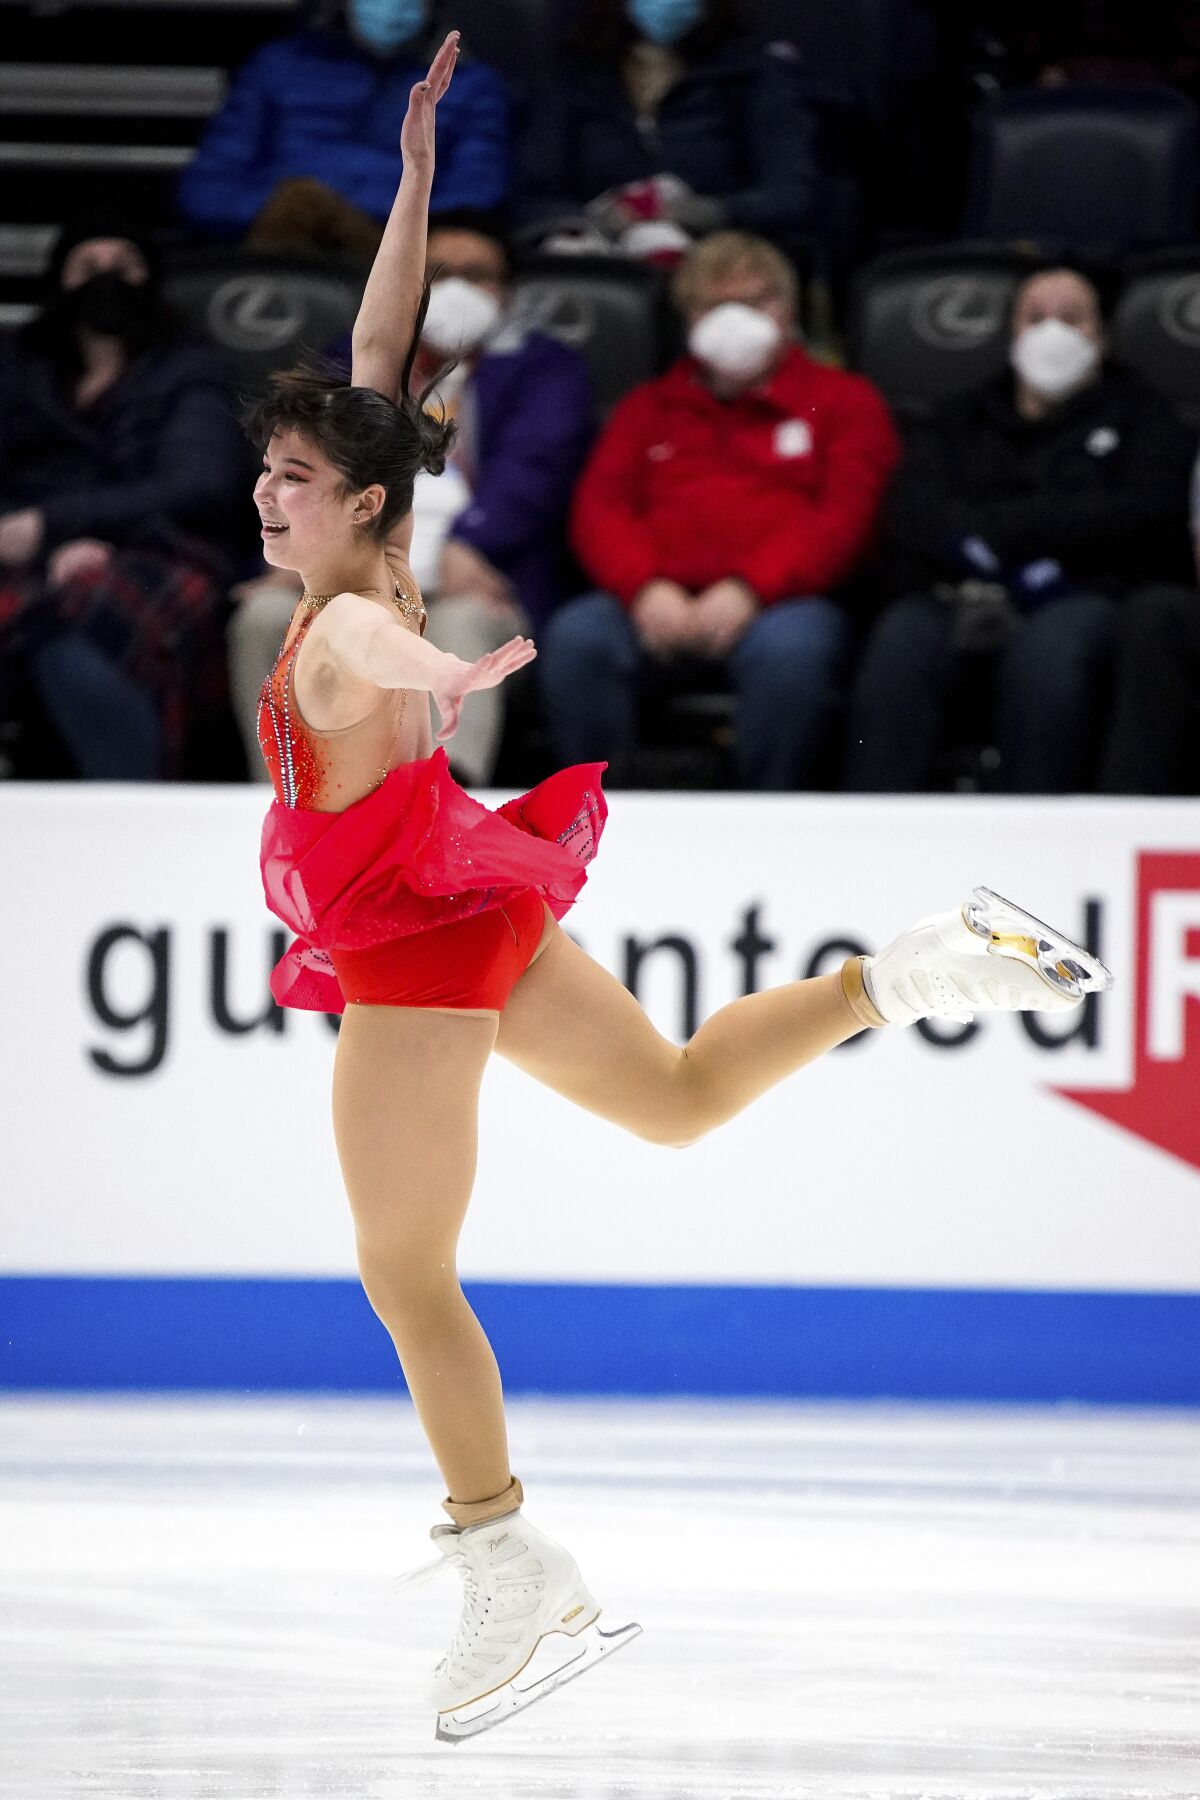 Alysa Liu skates in the ladies short program event during the U.S. Figure Skating Championships in Nashville, Tenn., Thursday, Jan. 6, 2022. (Andrew Nelles/The Tennessean via AP)